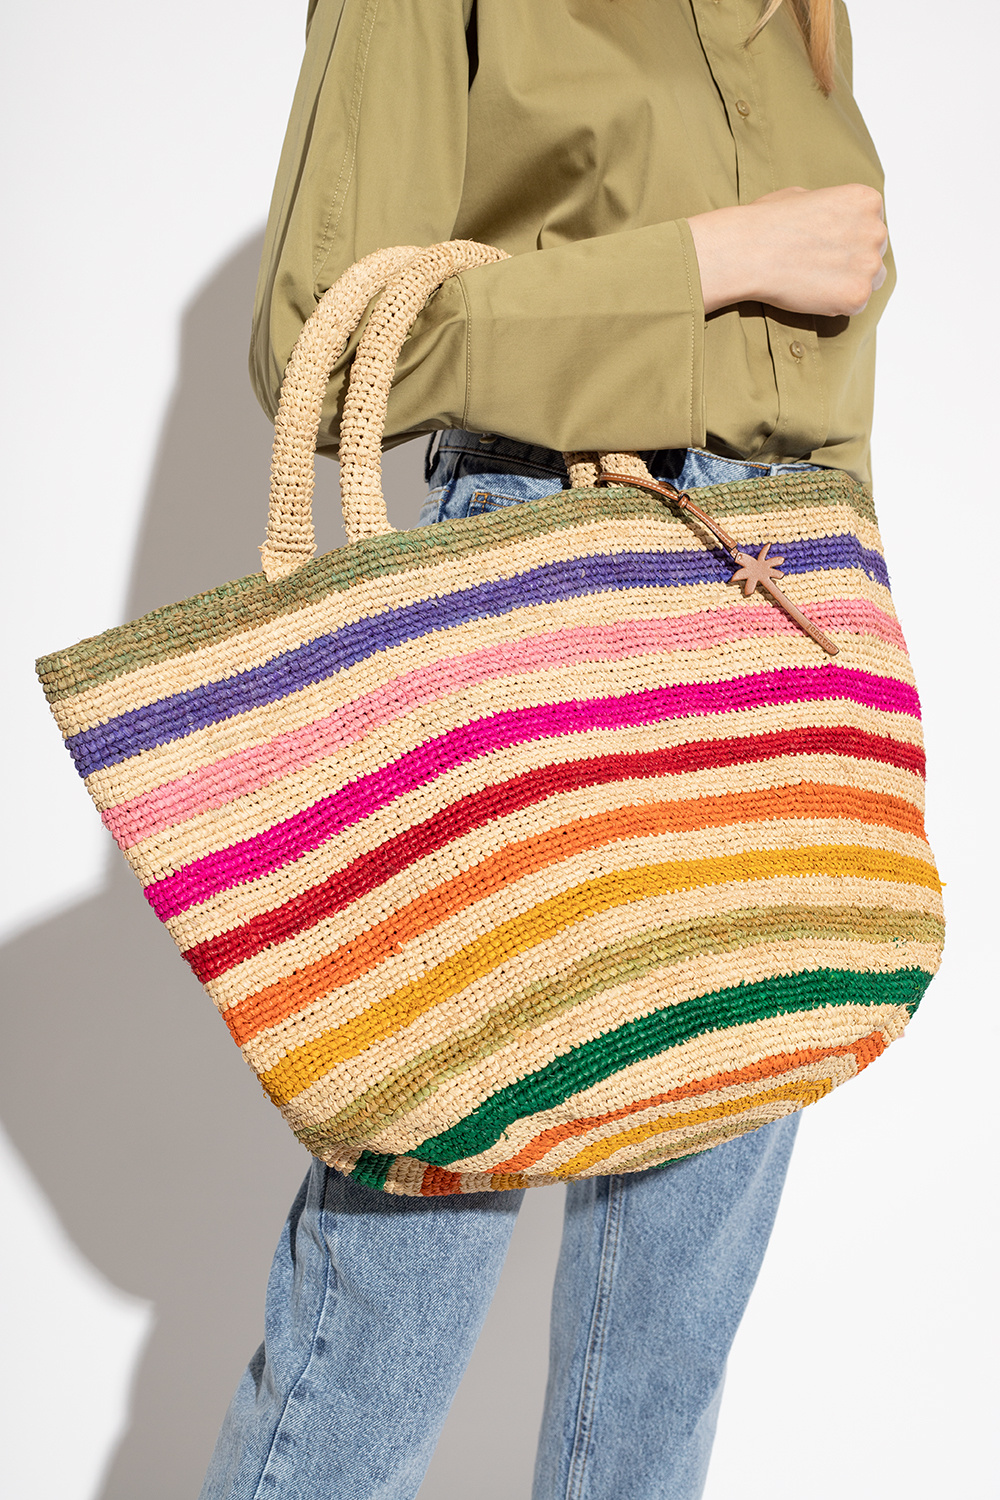 Manebí ‘Summer’ shopper bag